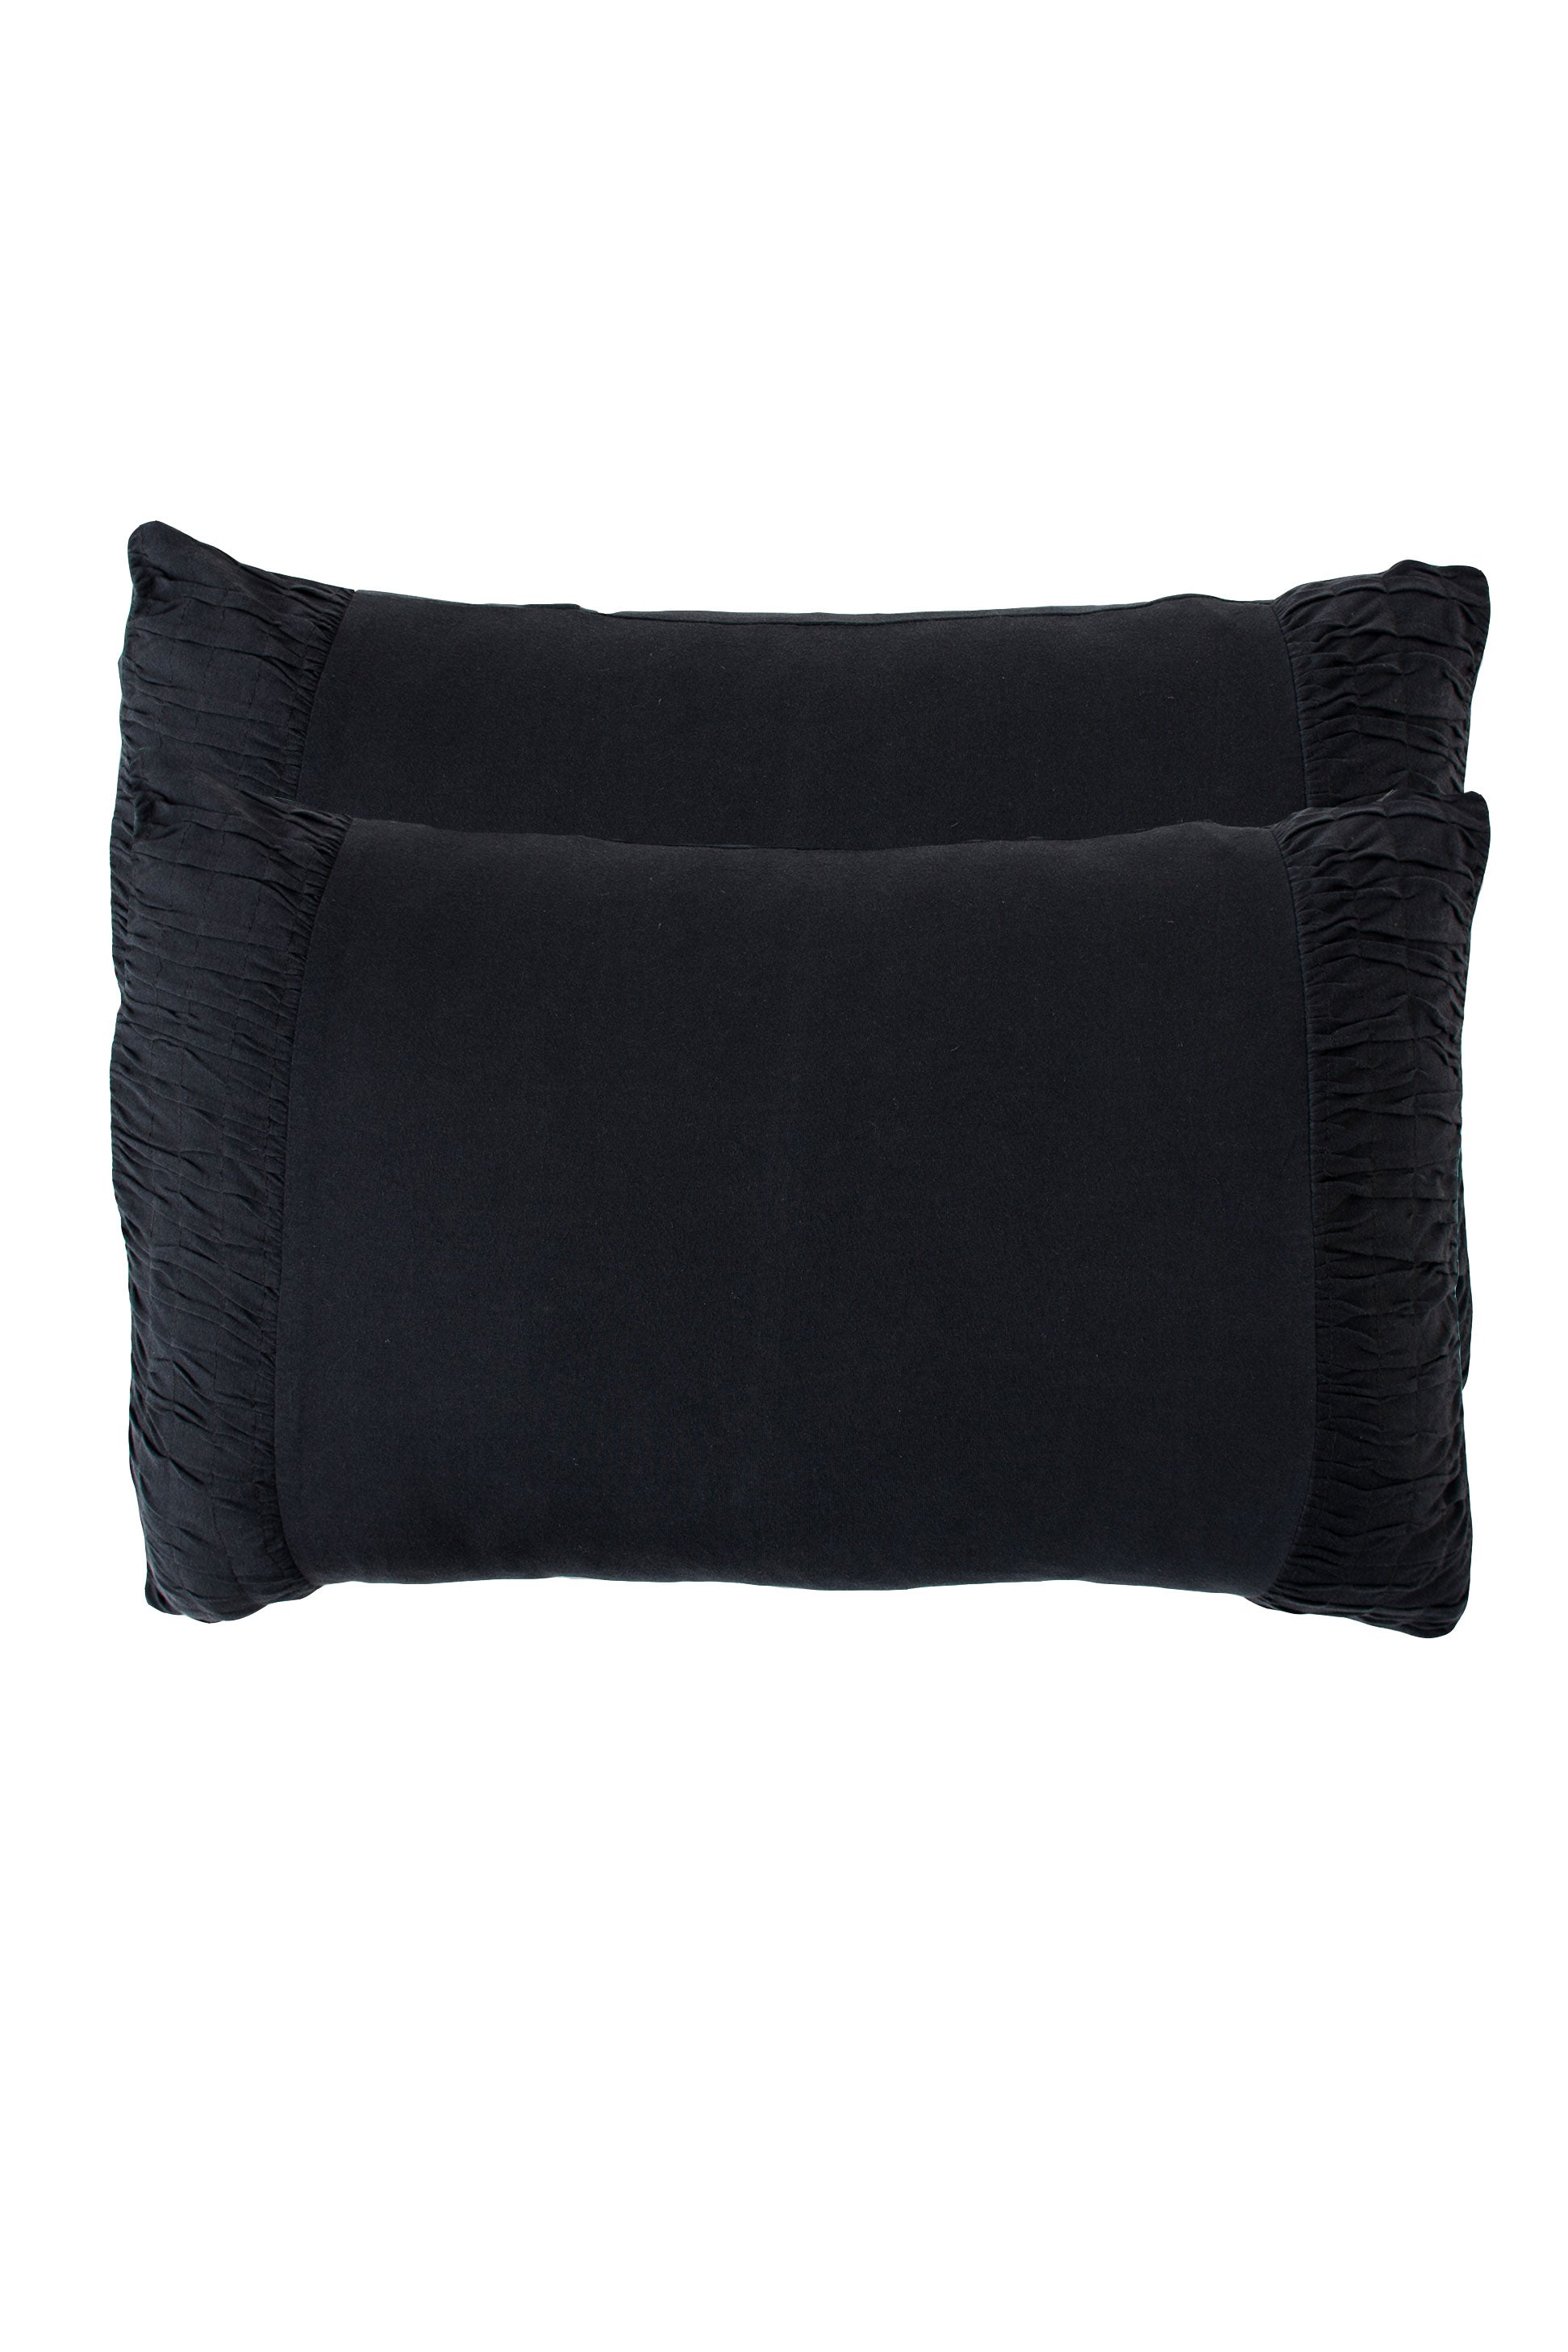 Lazybones Rosette Pillowcase Set - Charcoal